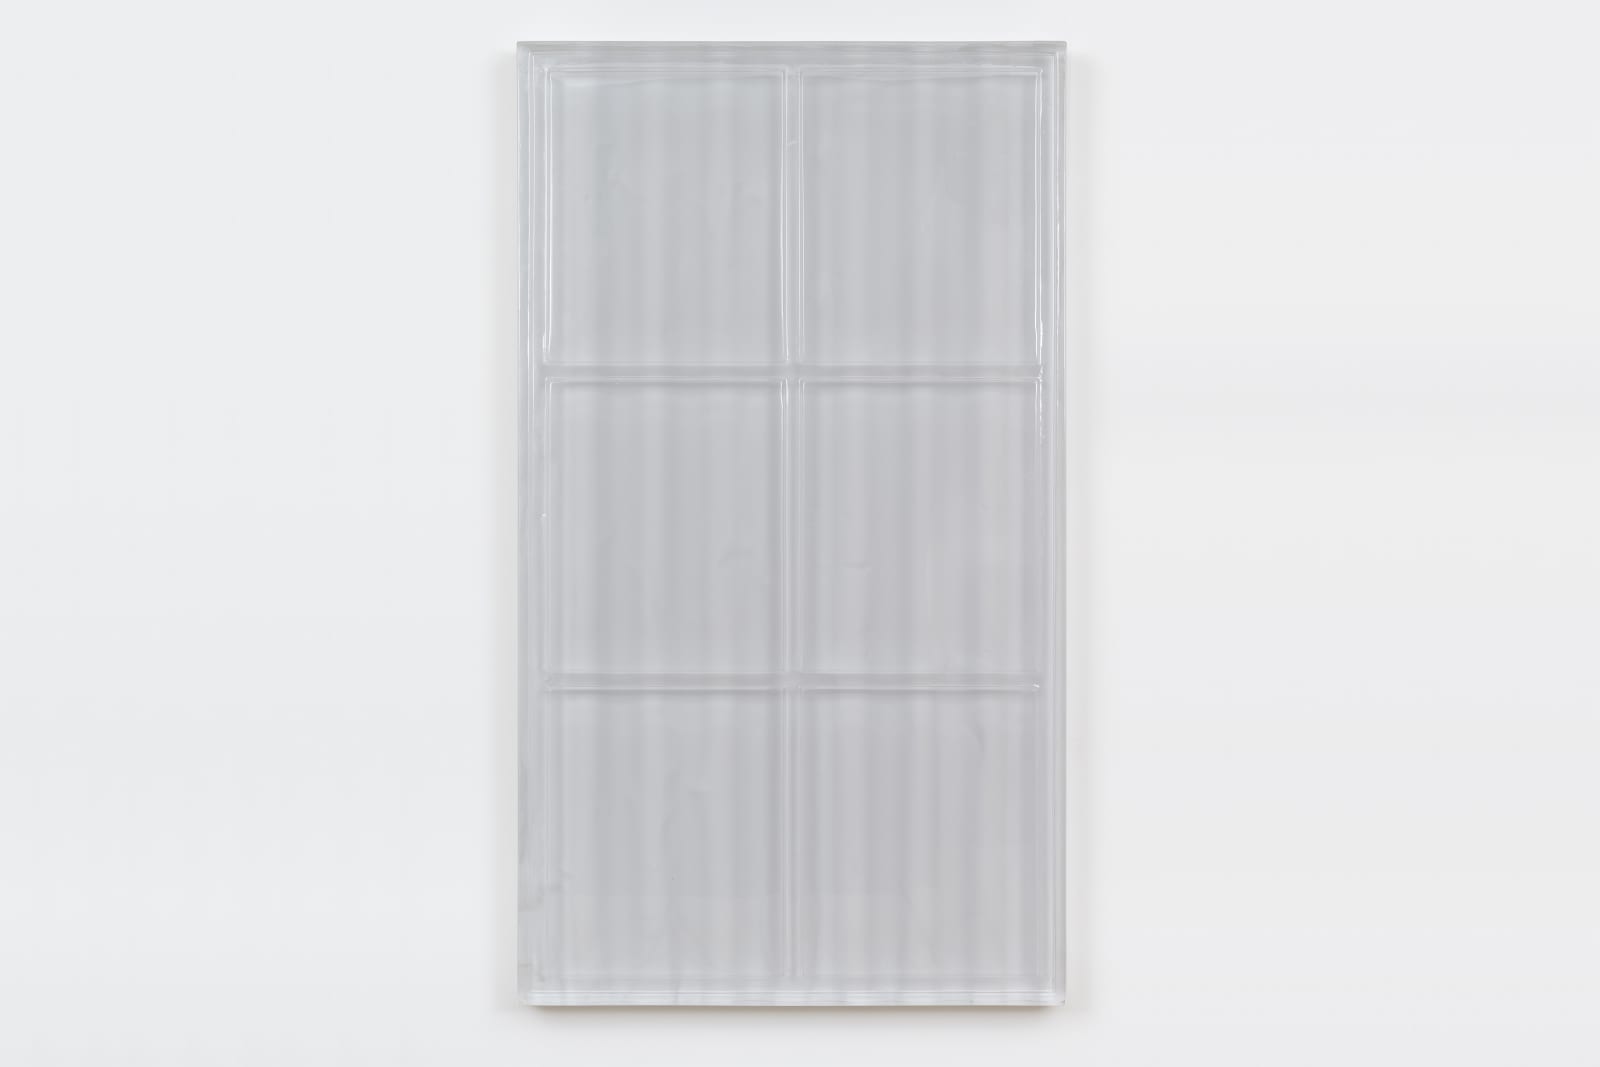 Rachel Whiteread, Untitled (Snow Window), 2020